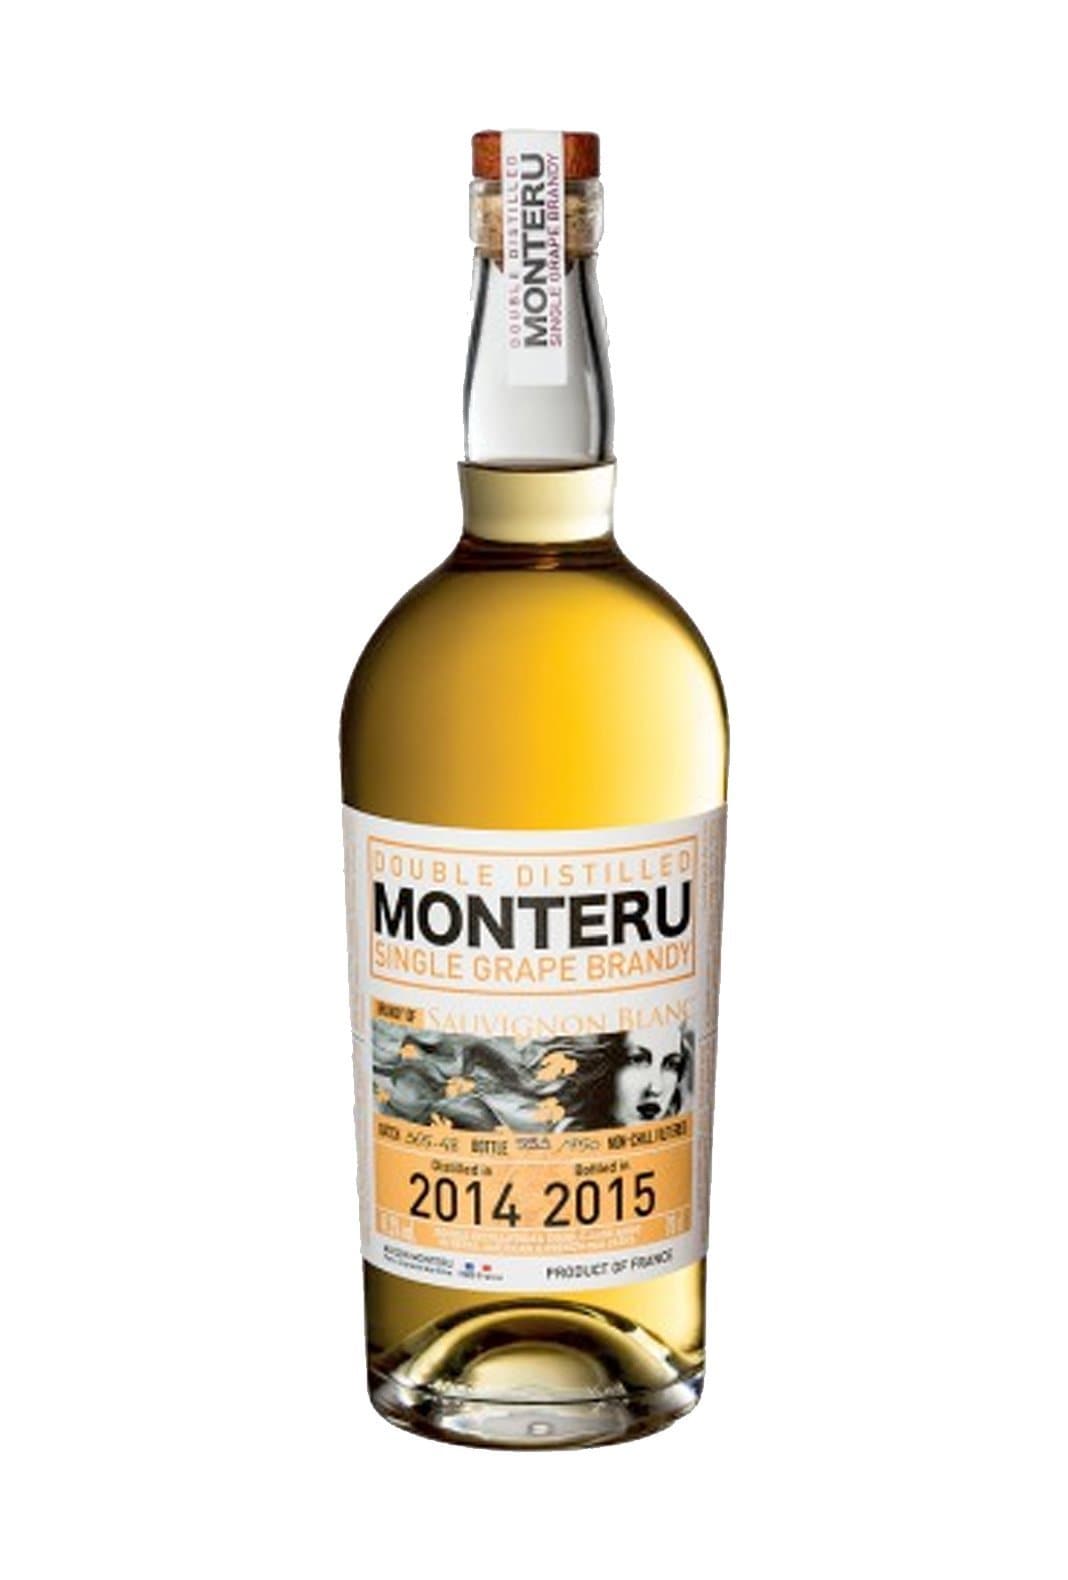 Naud Brandy Monteru Sauvignon Blanc 41.3% 700ml | Liquor & Spirits | Shop online at Spirits of France